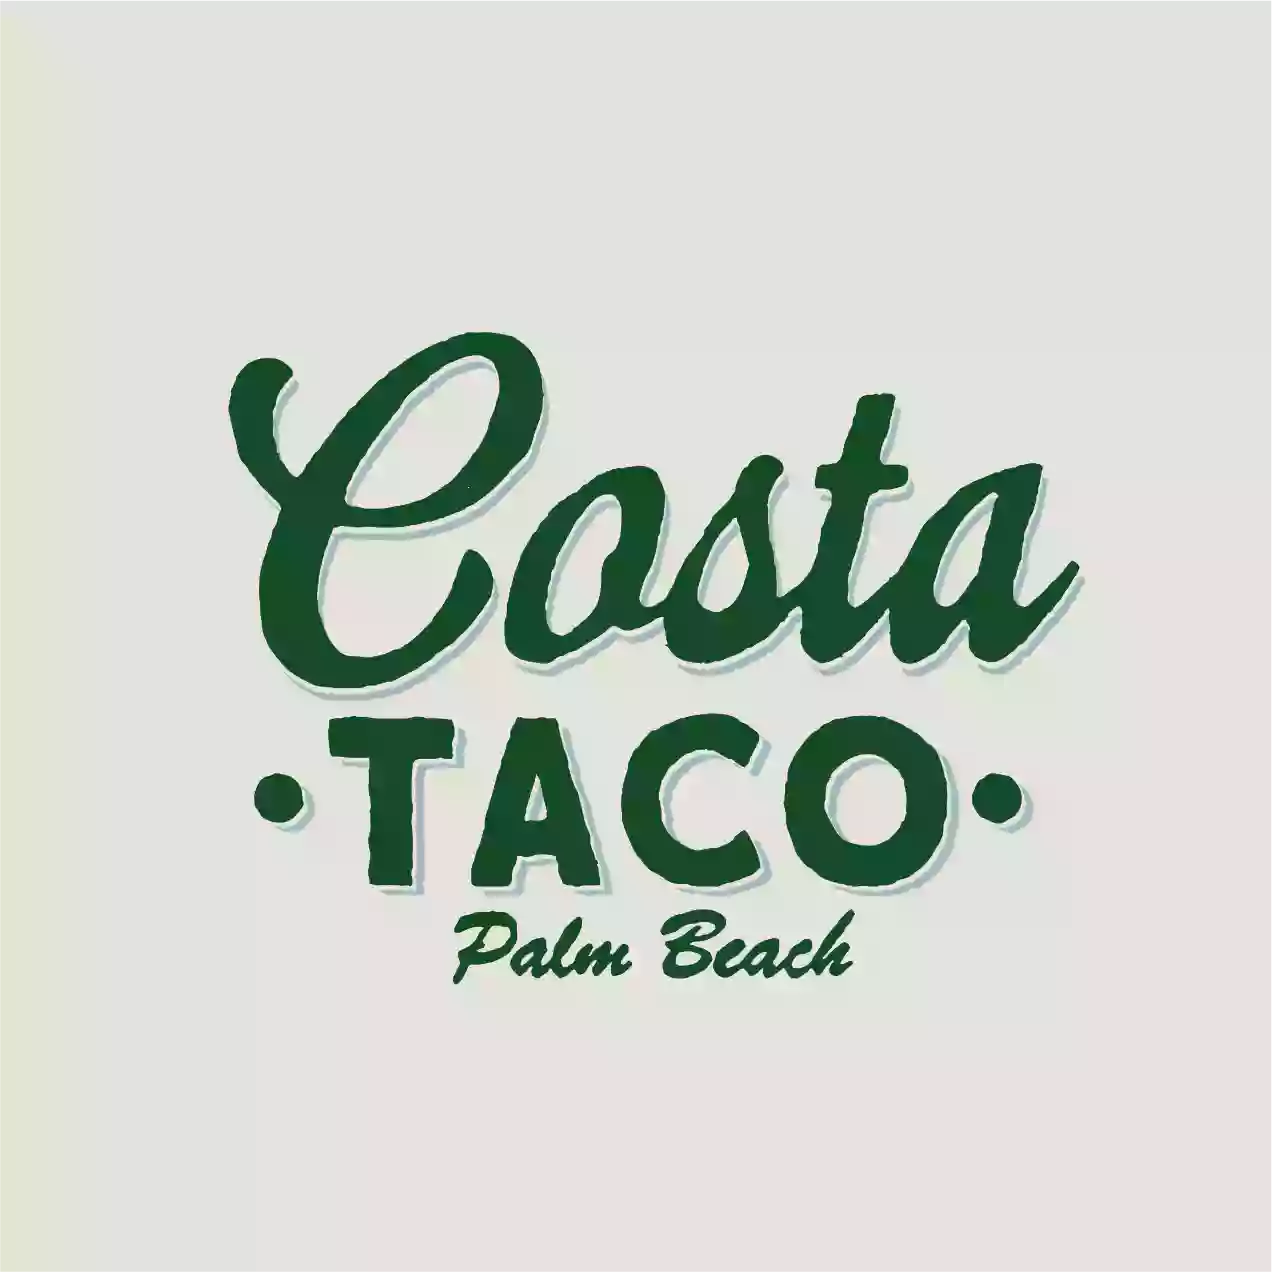 Costa Taco Palm Beach